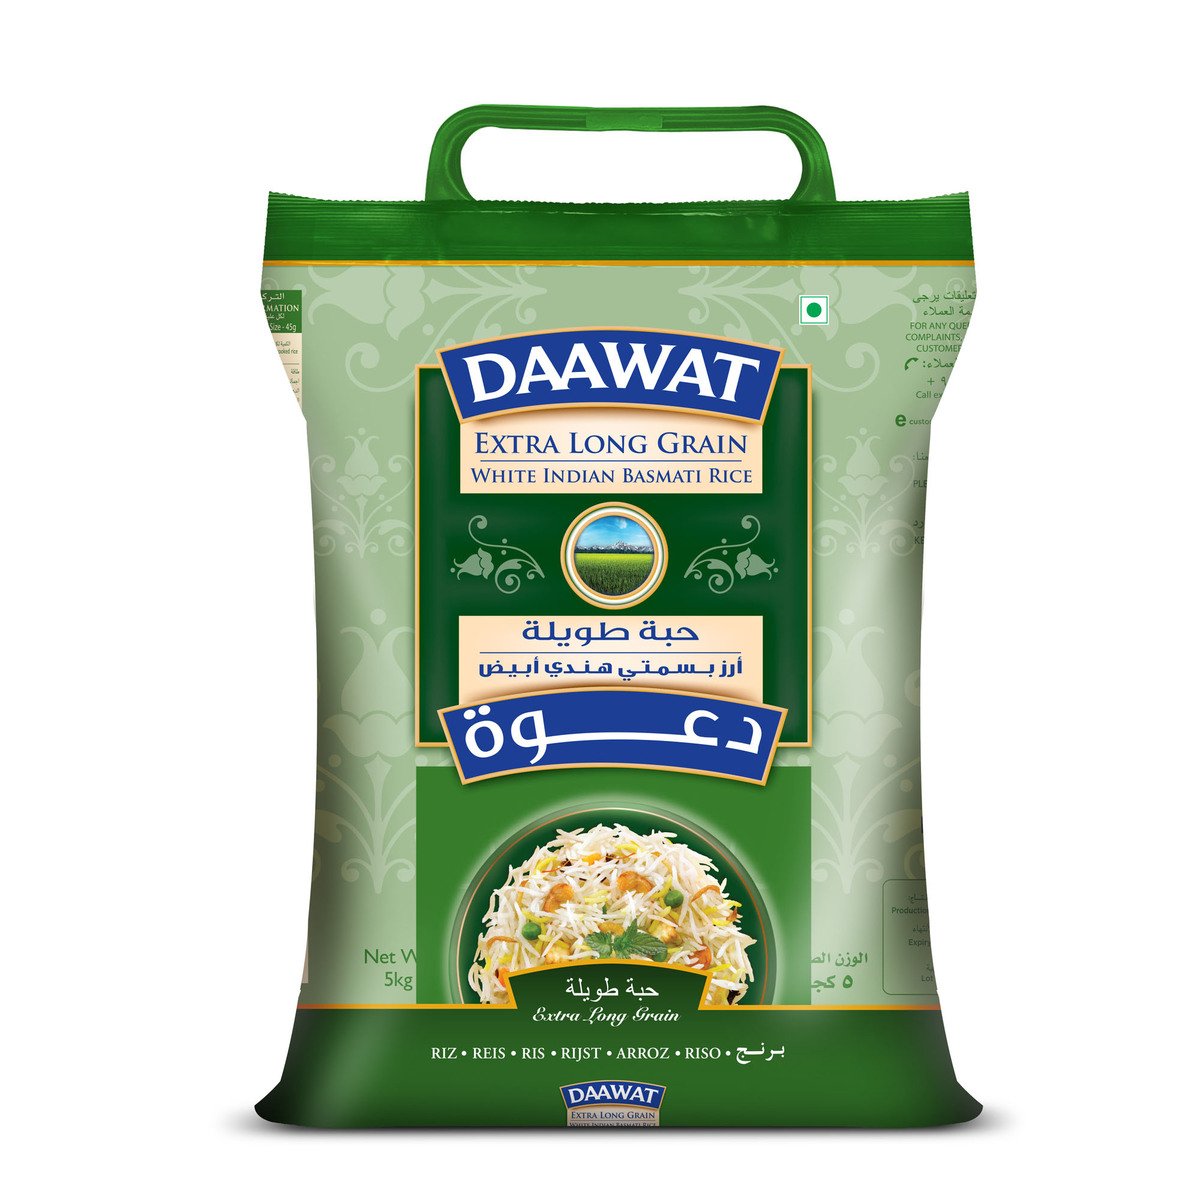 Daawat Extra Long Grain White Indian Basmati Rice 5 kg